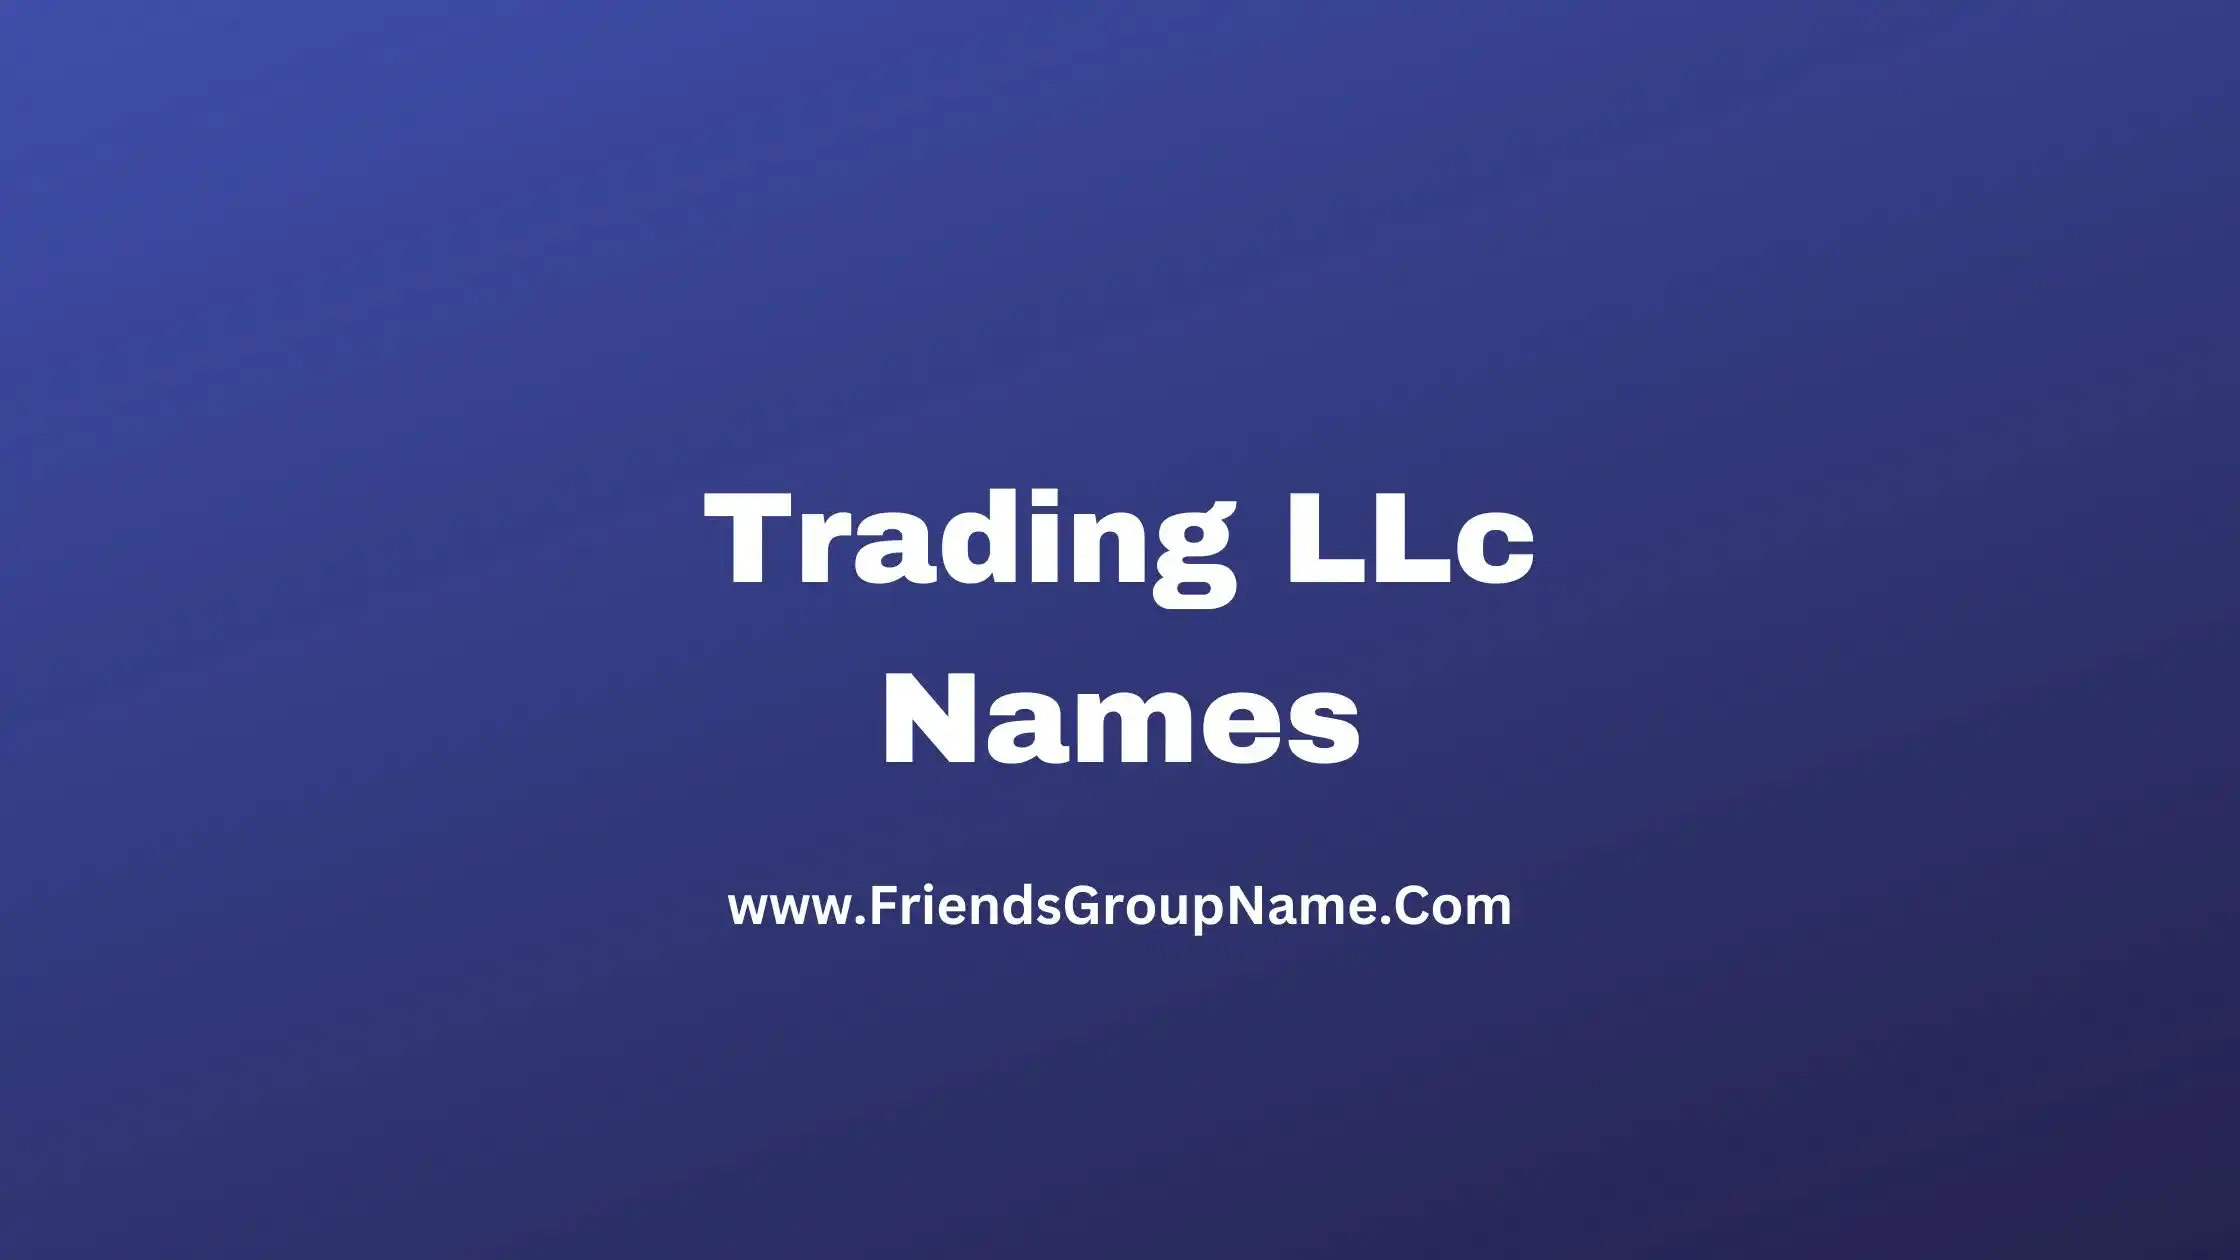 Trading LLC Names